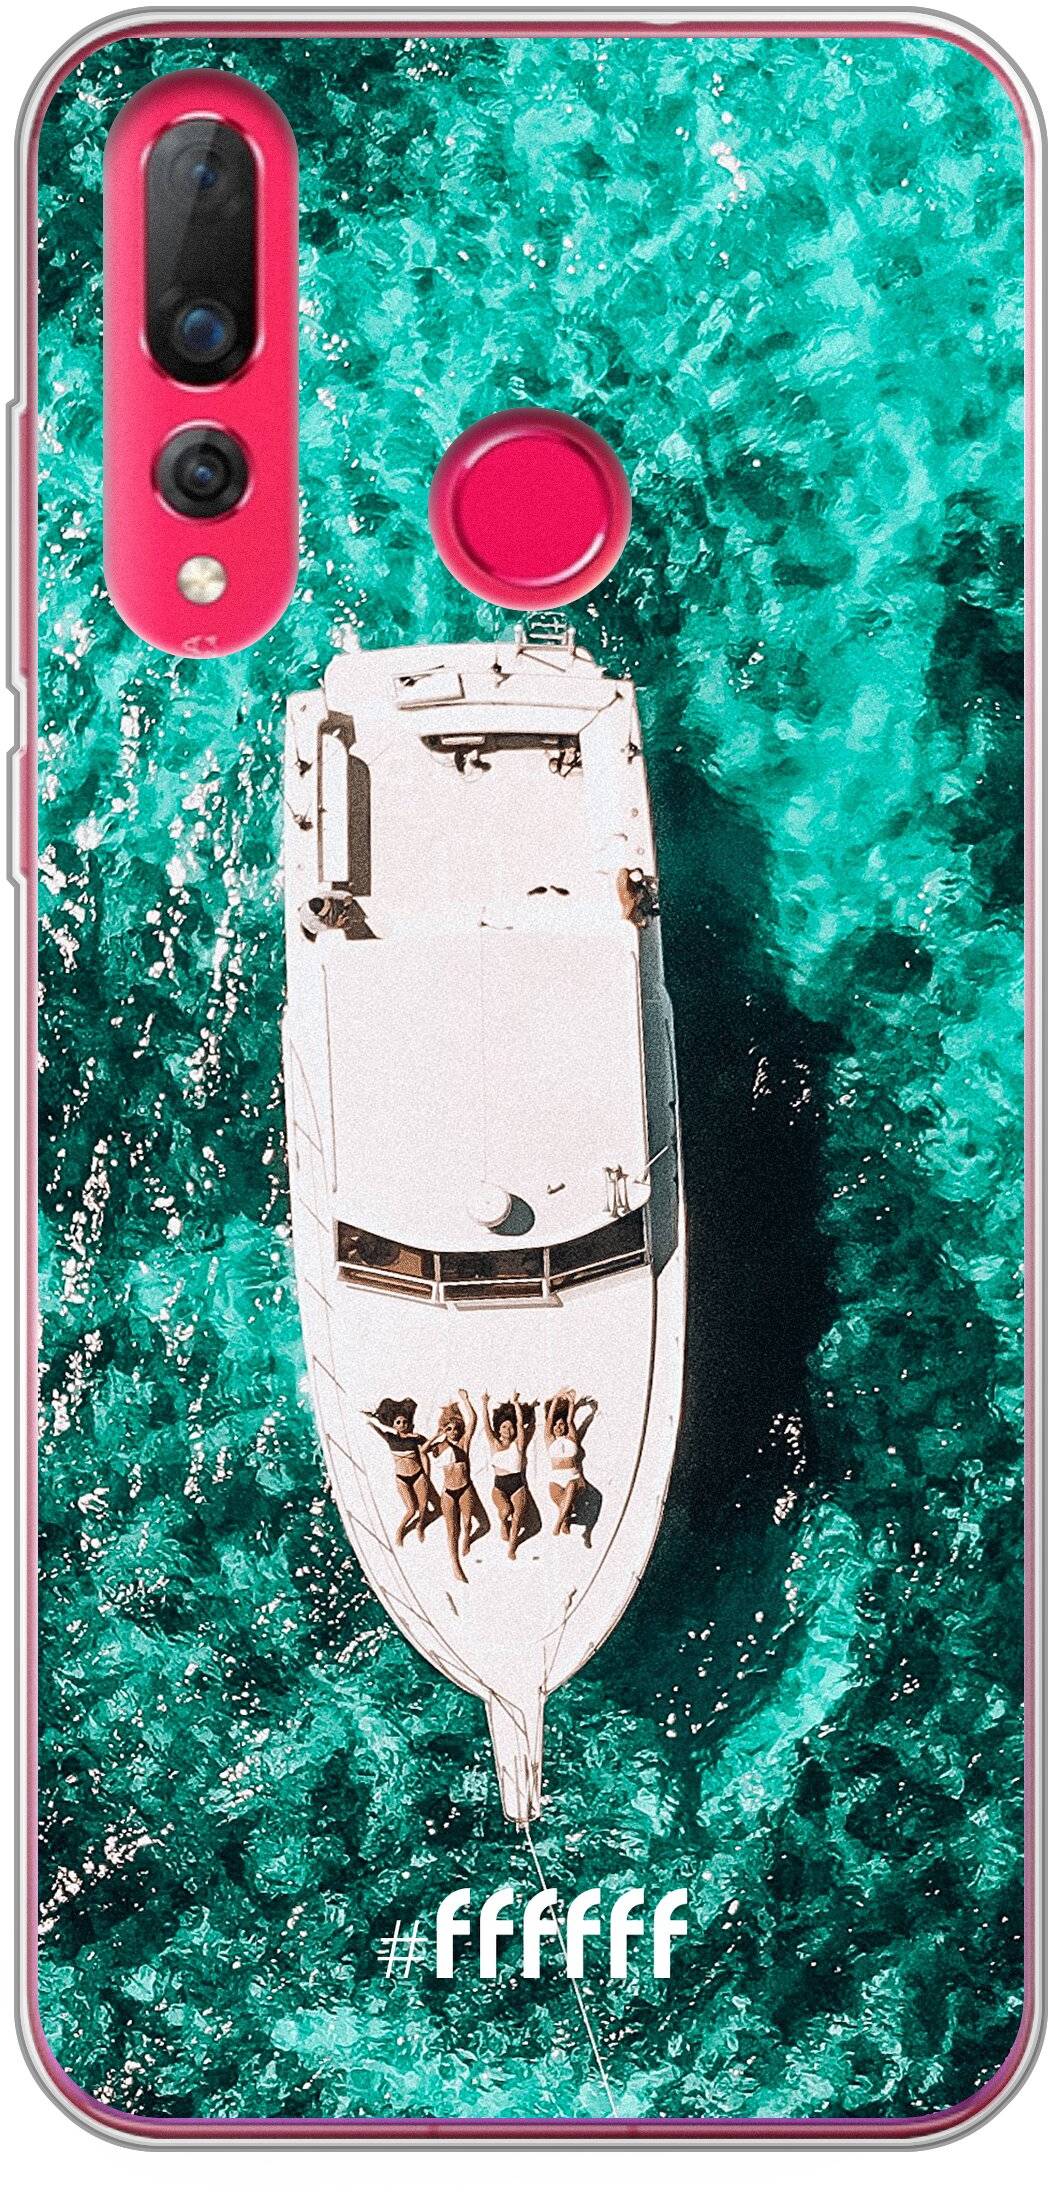 Yacht Life P30 Lite